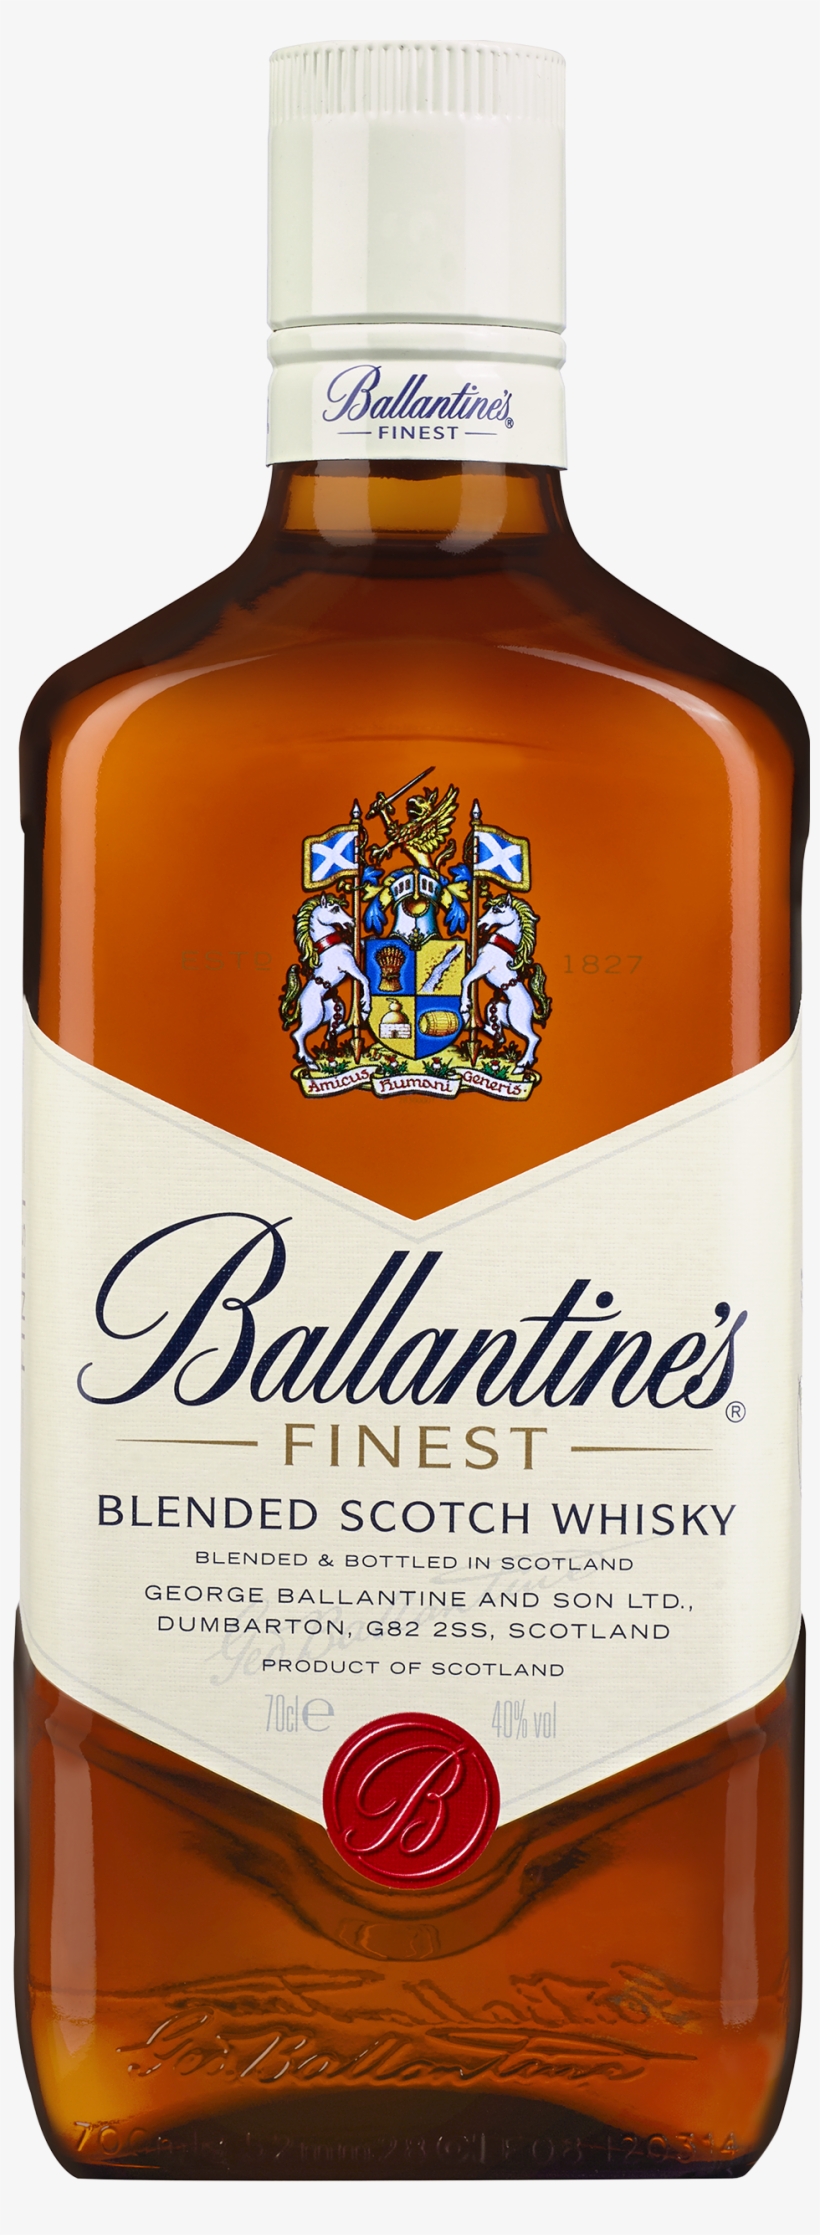 Packshot Ballantines - Ballantines Whisky Png, transparent png #9017343